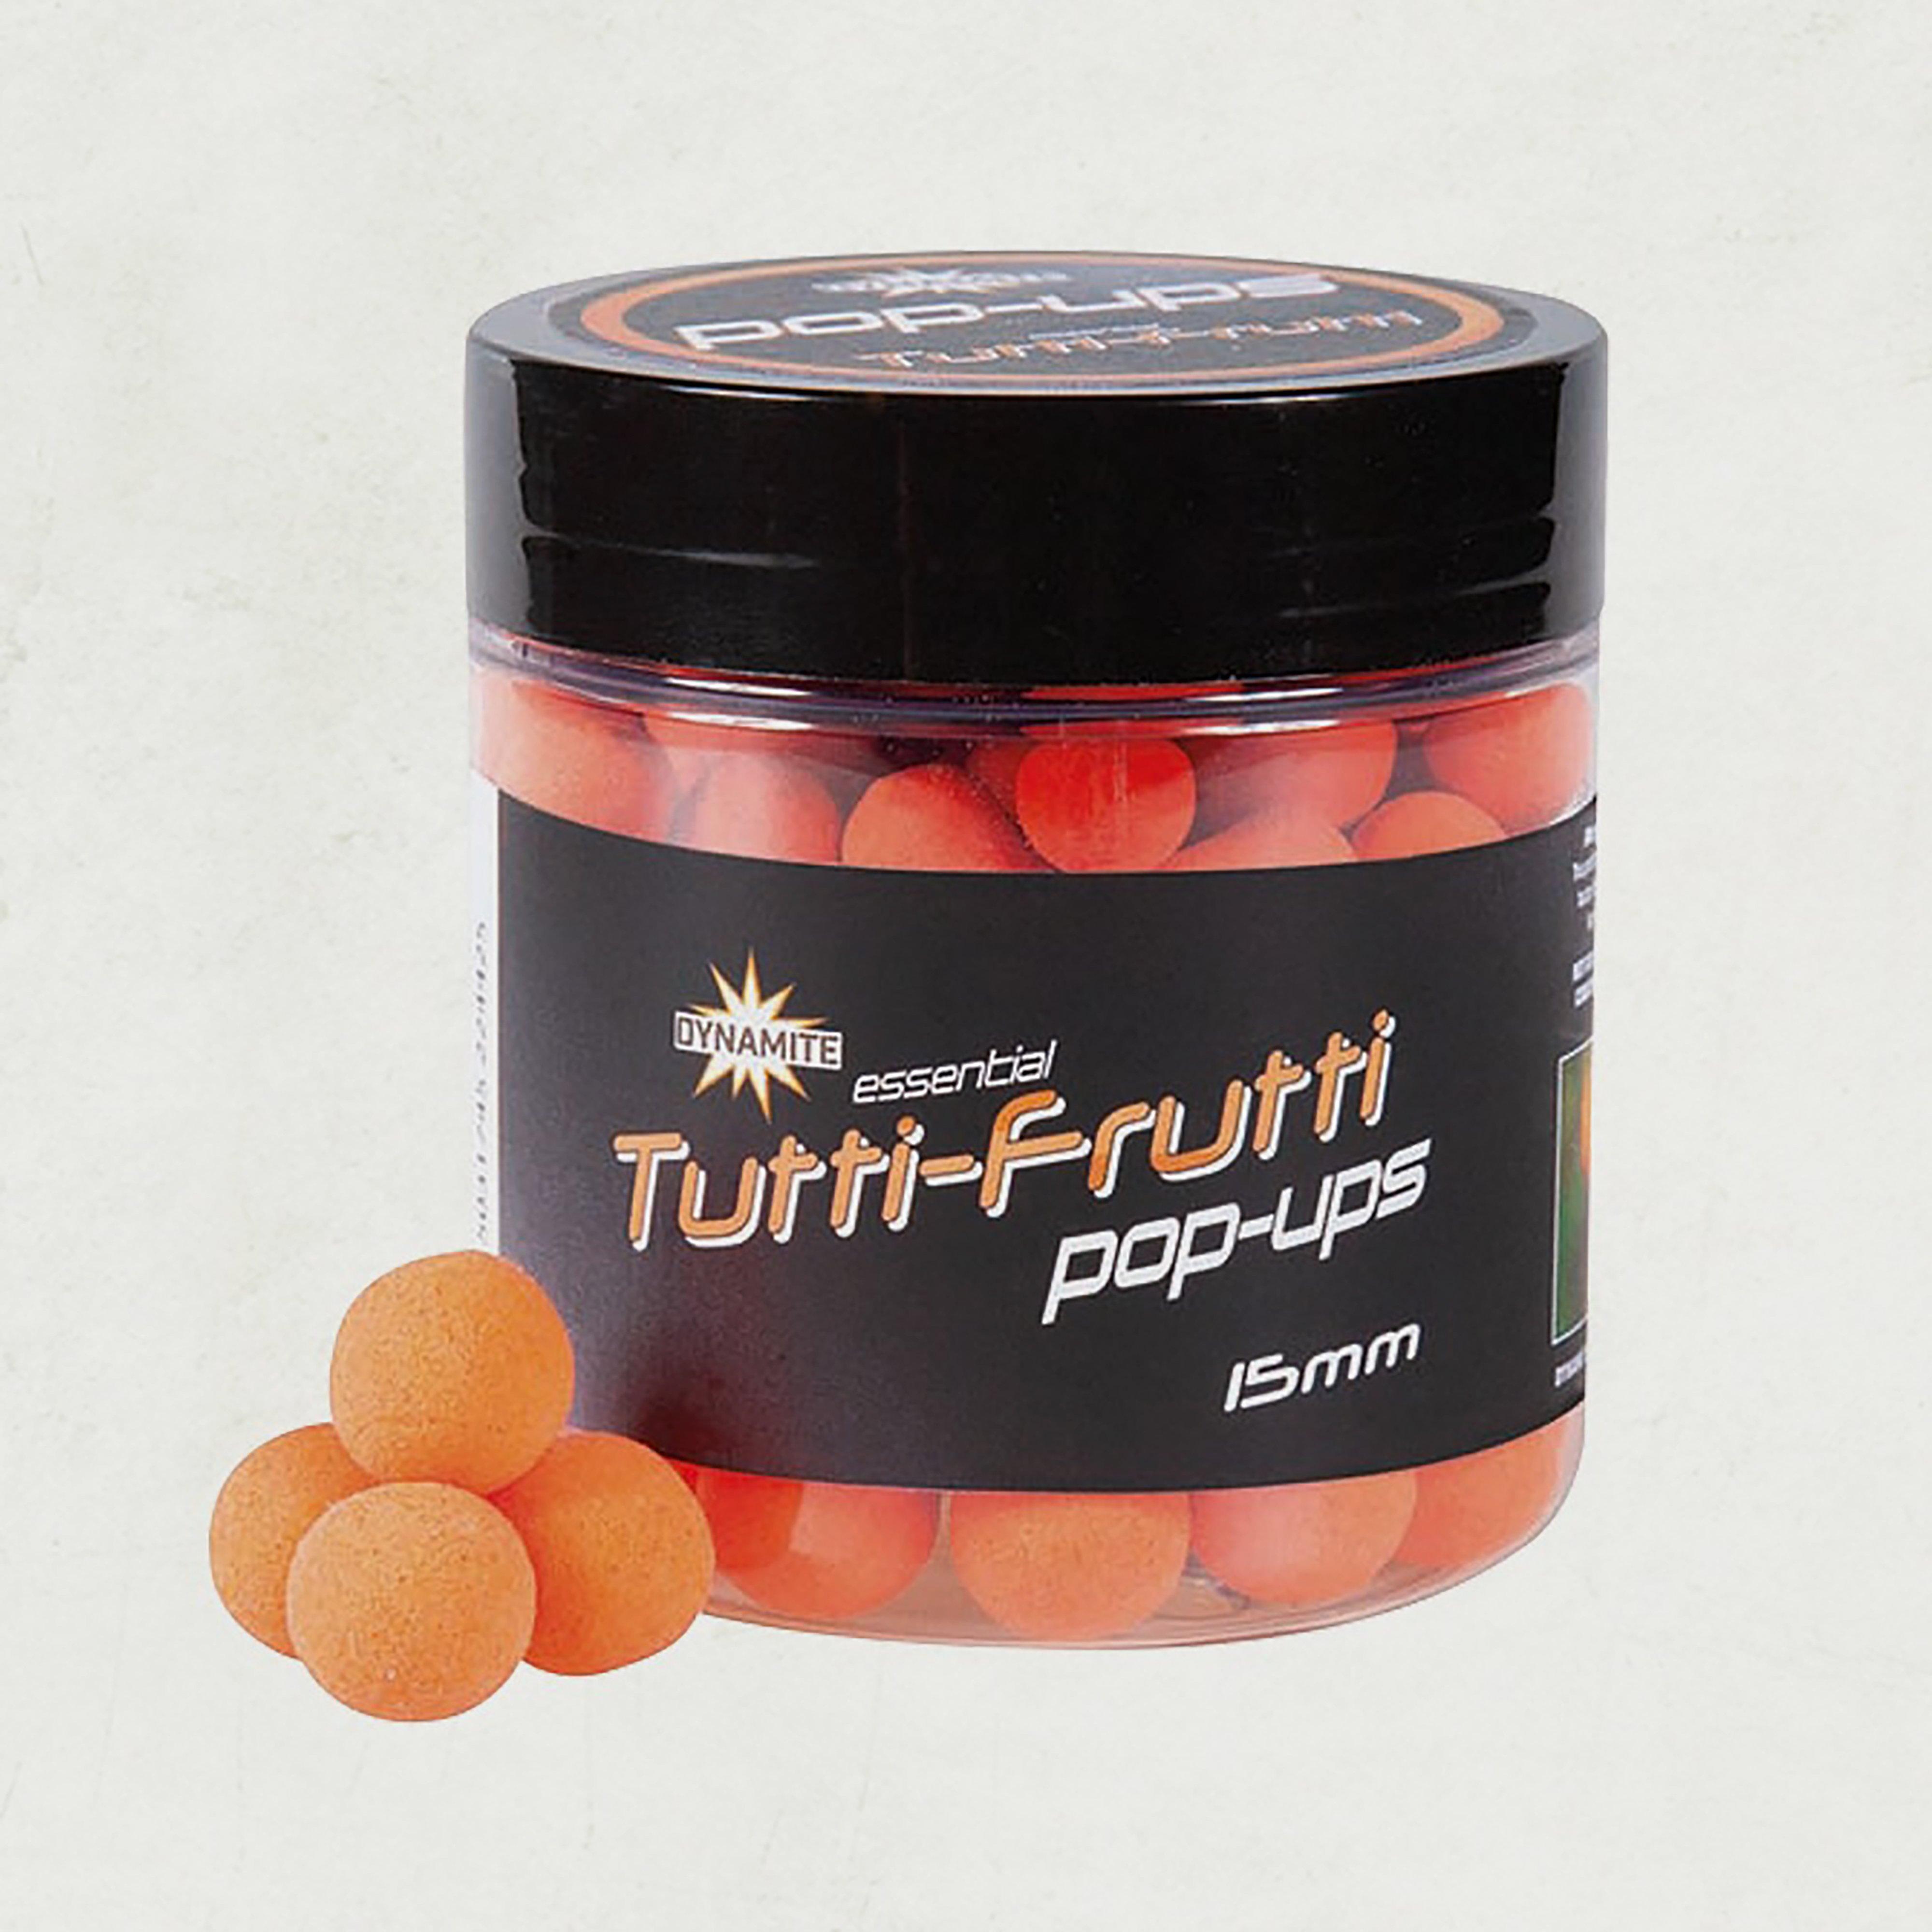 Dynamite Fluro Pop-ups In Tutti Frutti (15mm)